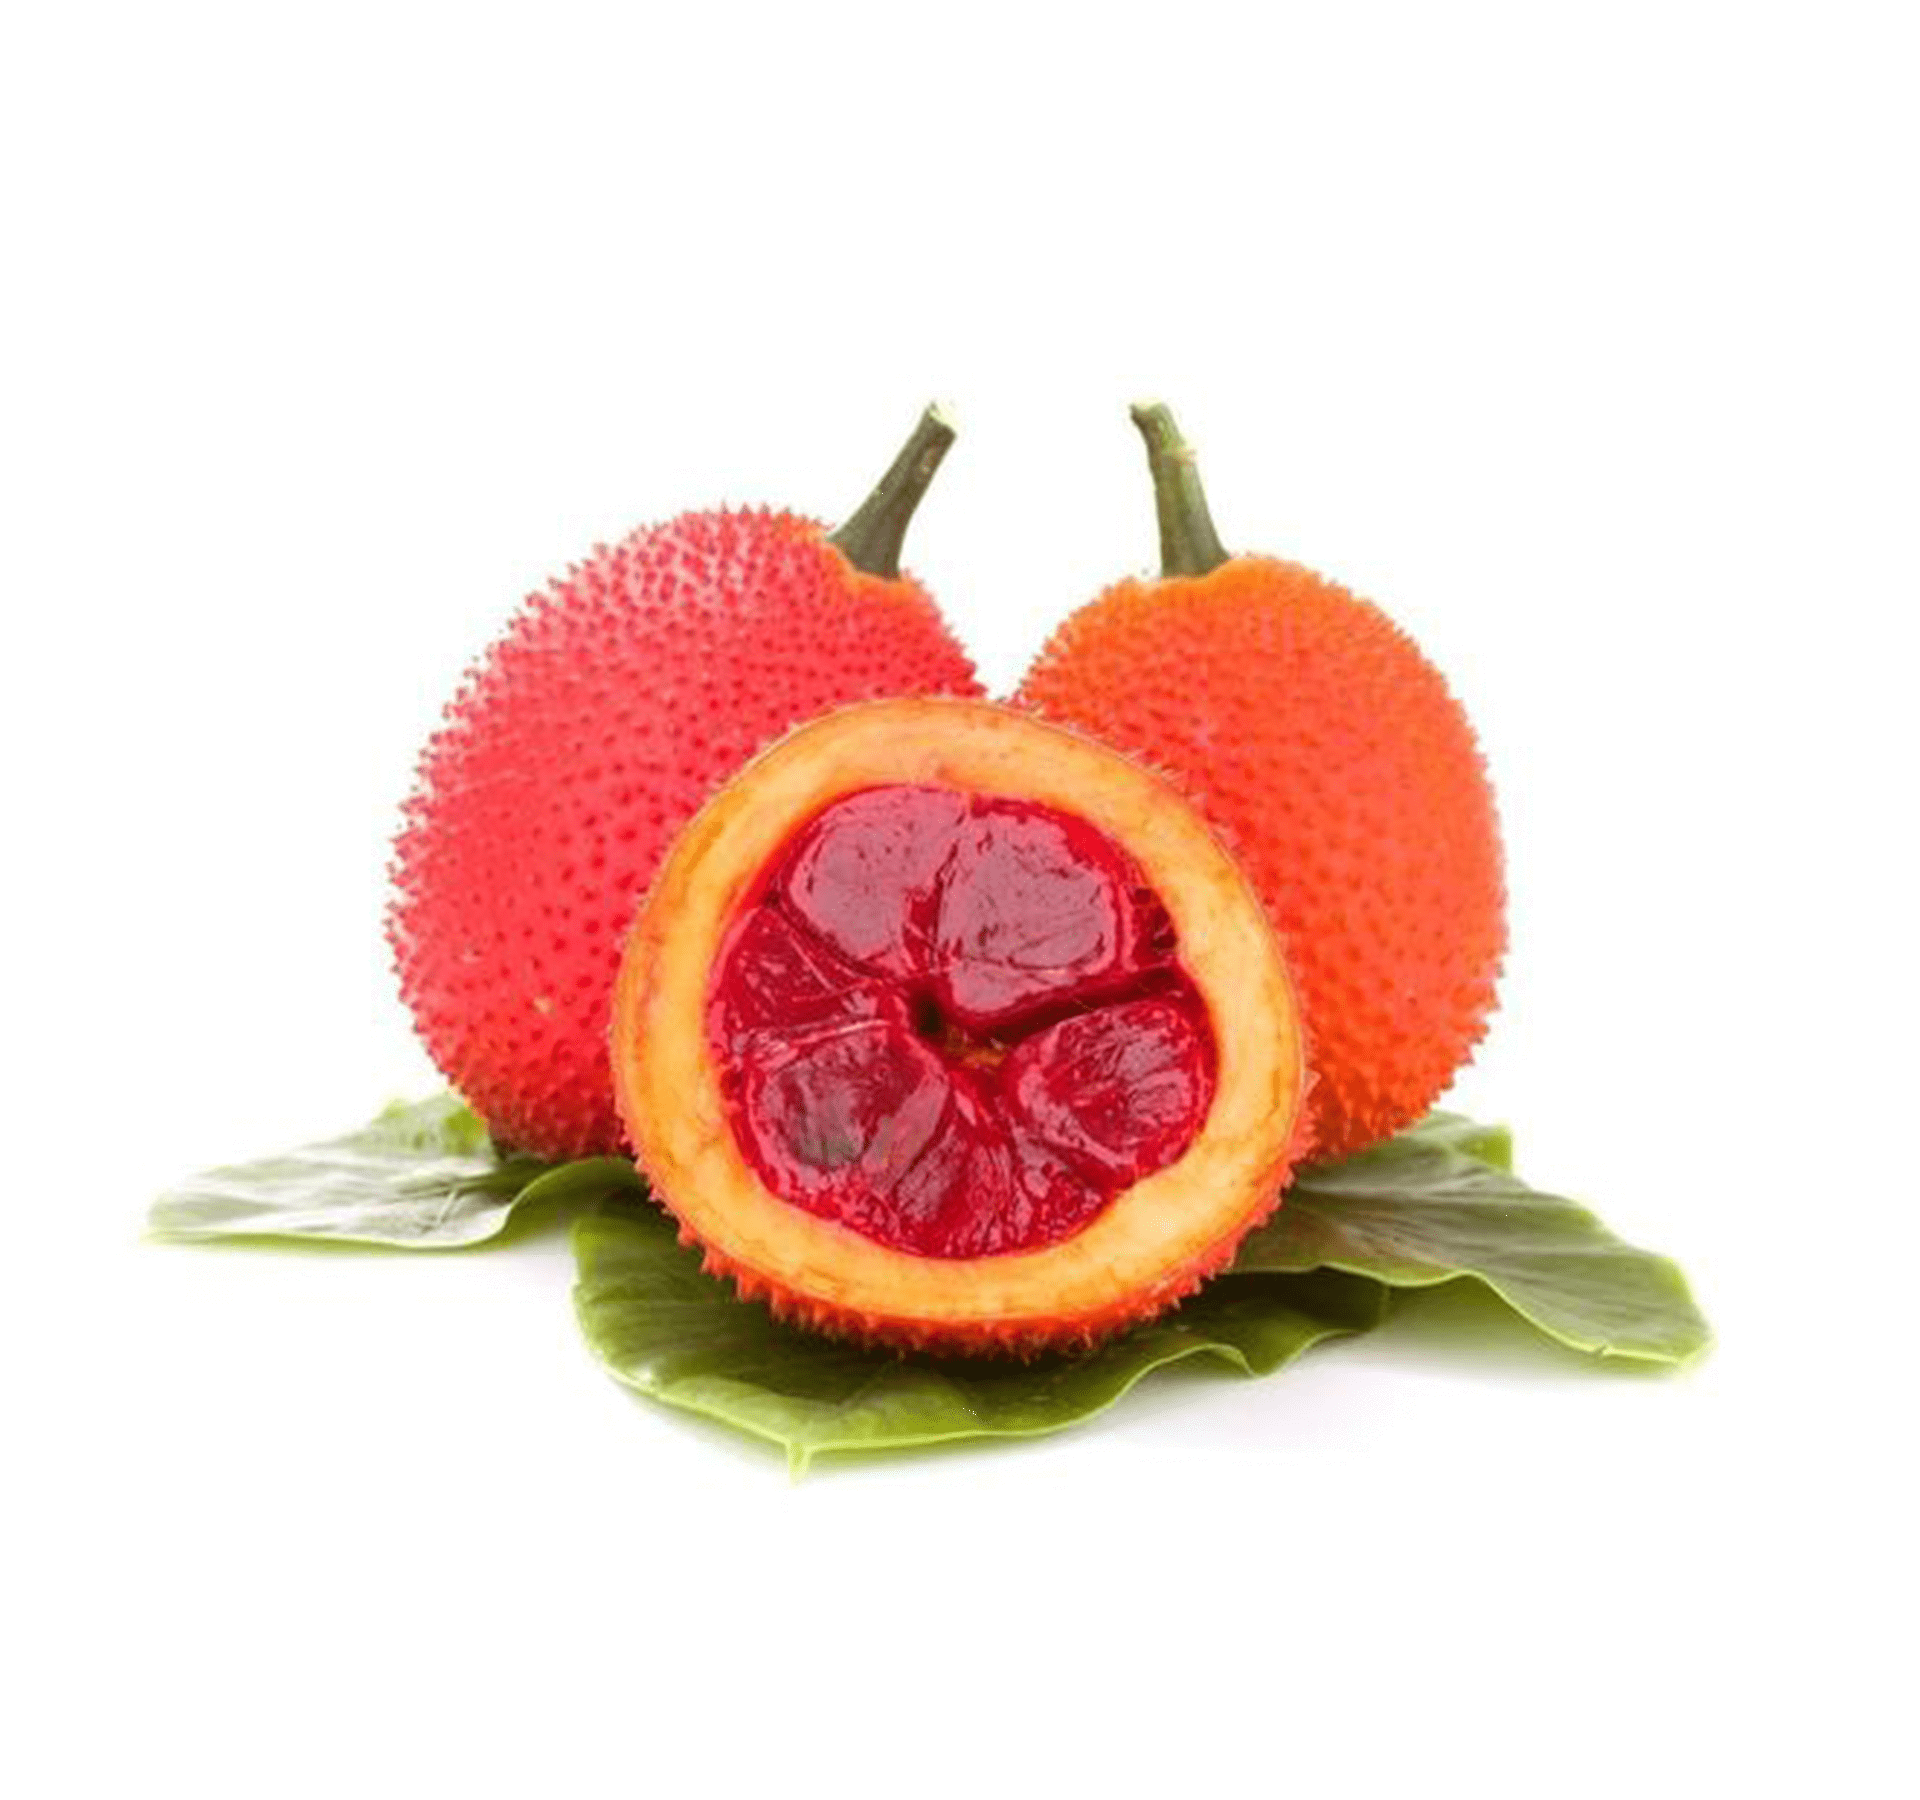 Gac Fruit | Exotic Fruits - Rare & Tropical Exotic Fruit Shop UK